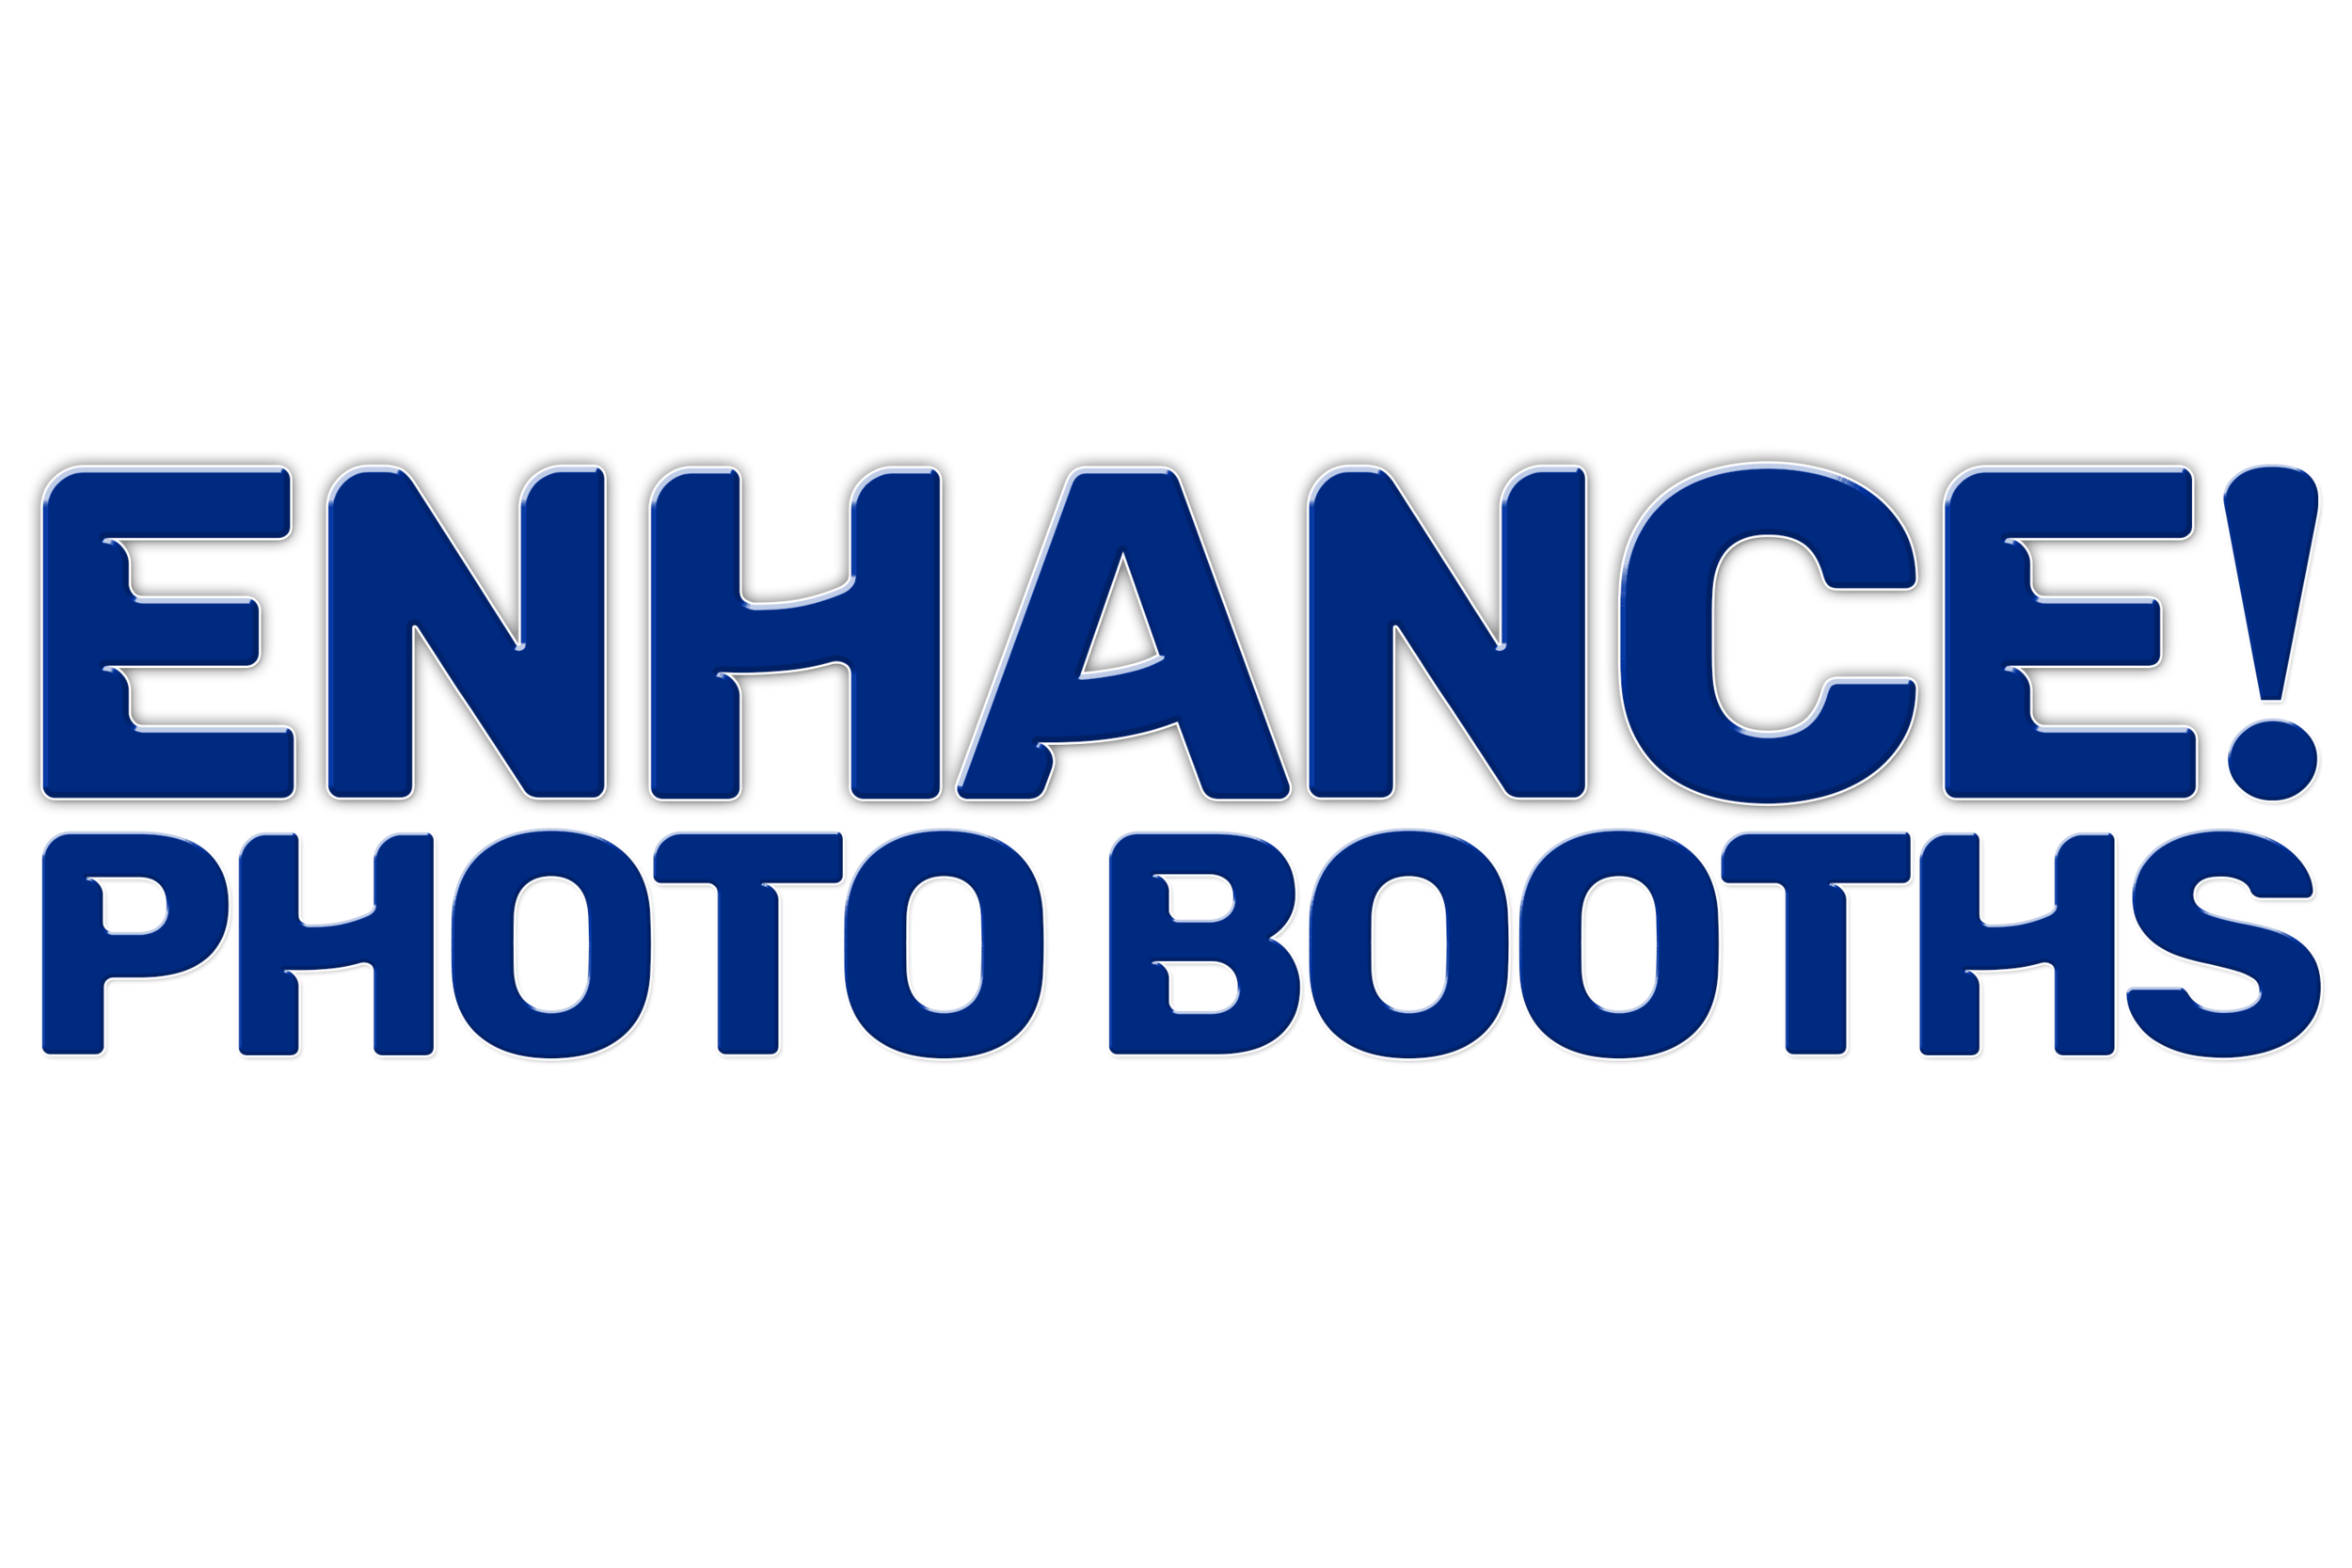 Enhance! Photo Booths